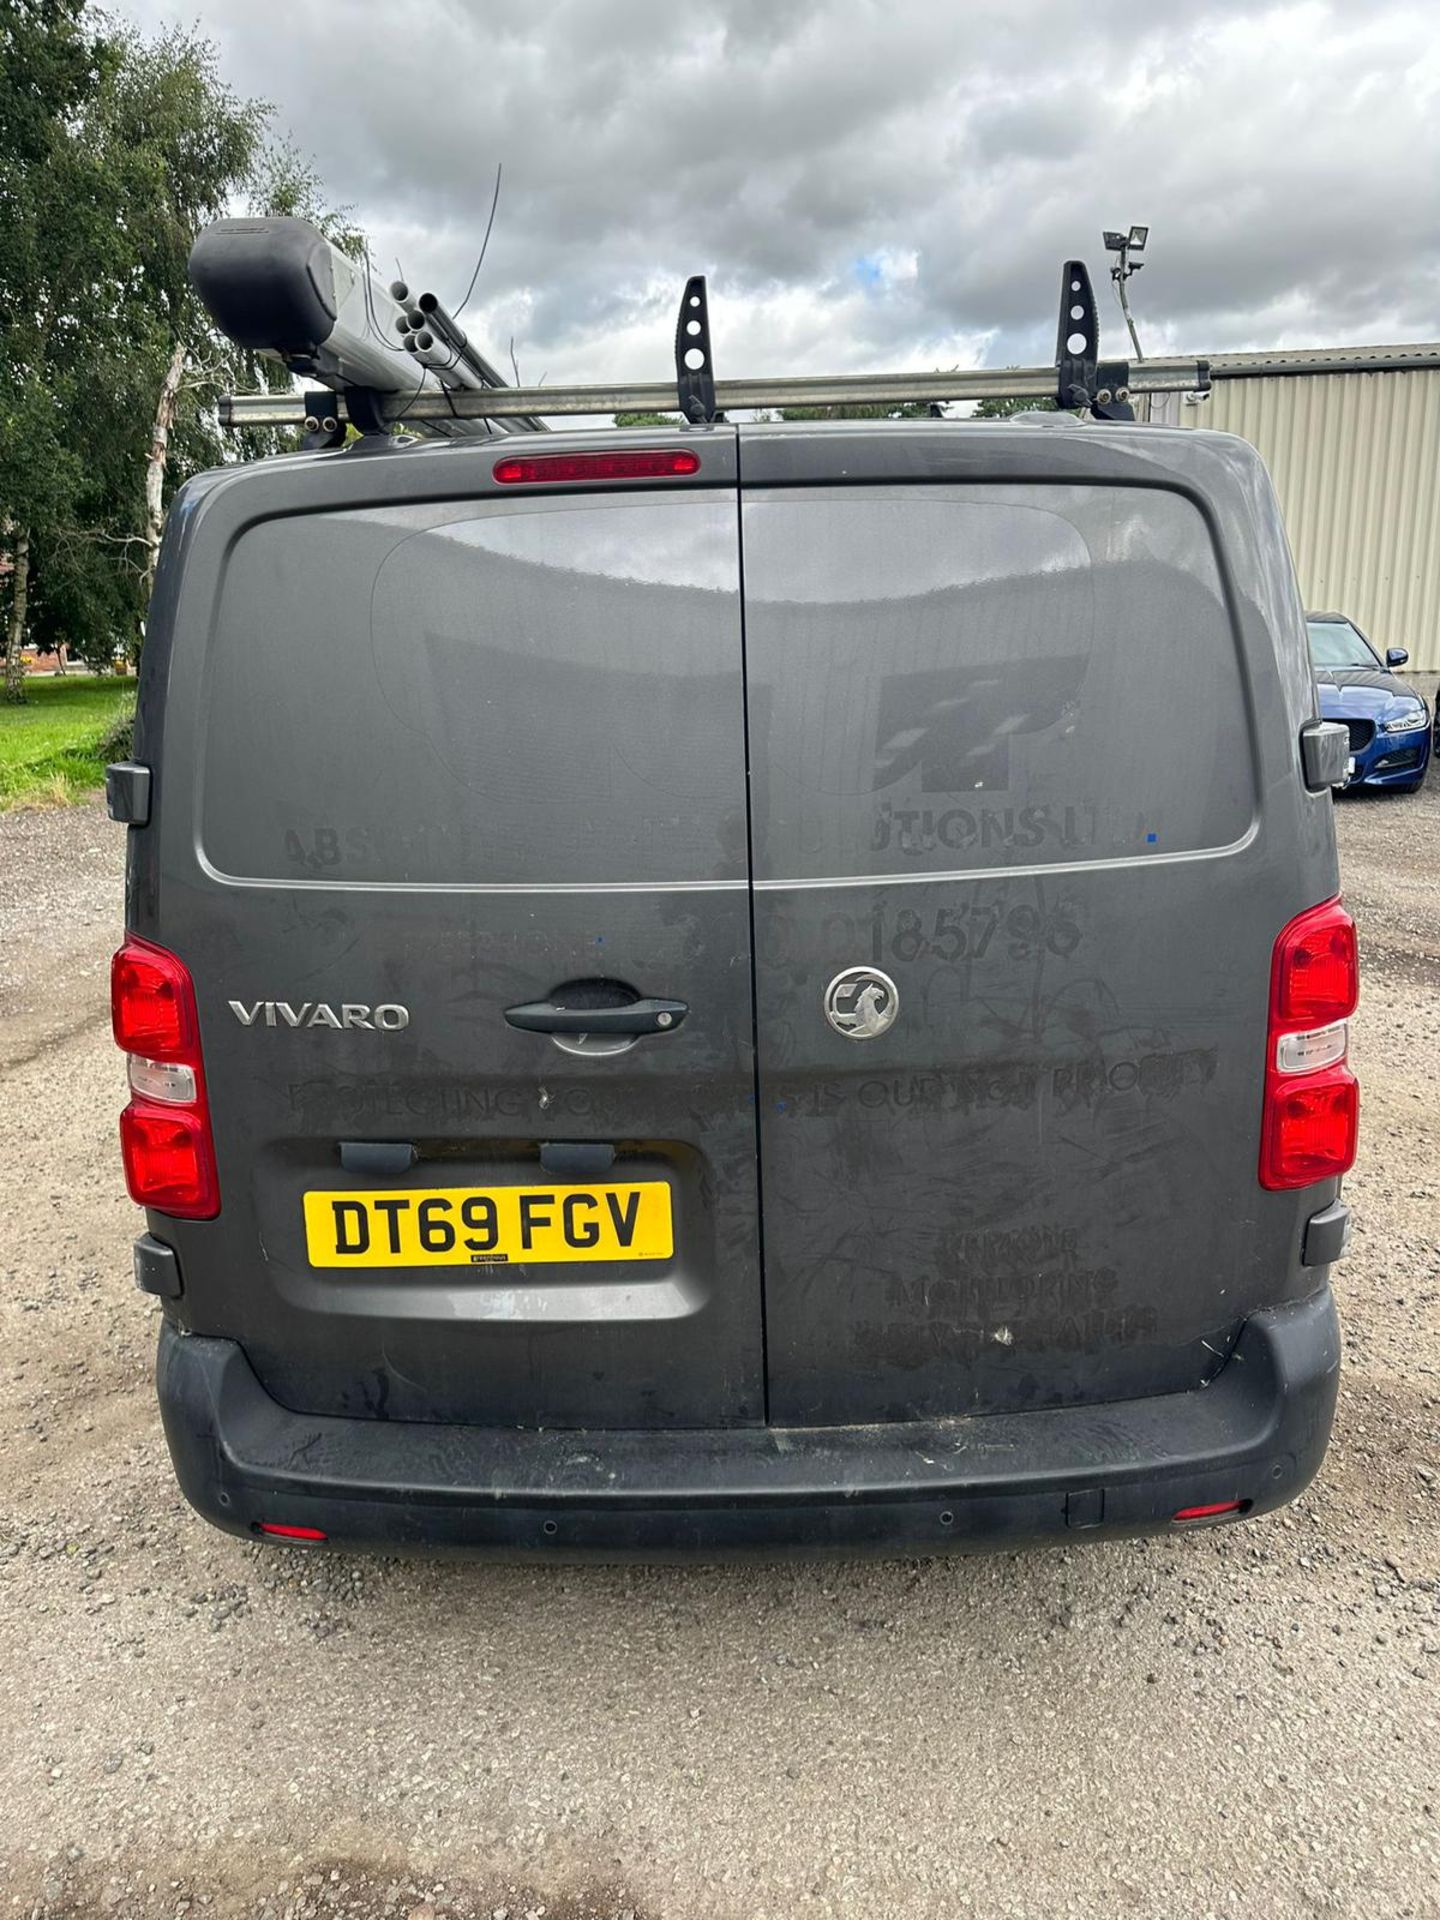 2019 69 Vauxhall vivaro Panel van - 123k miles - Air con - Roof rack - Ply lined - Image 2 of 5